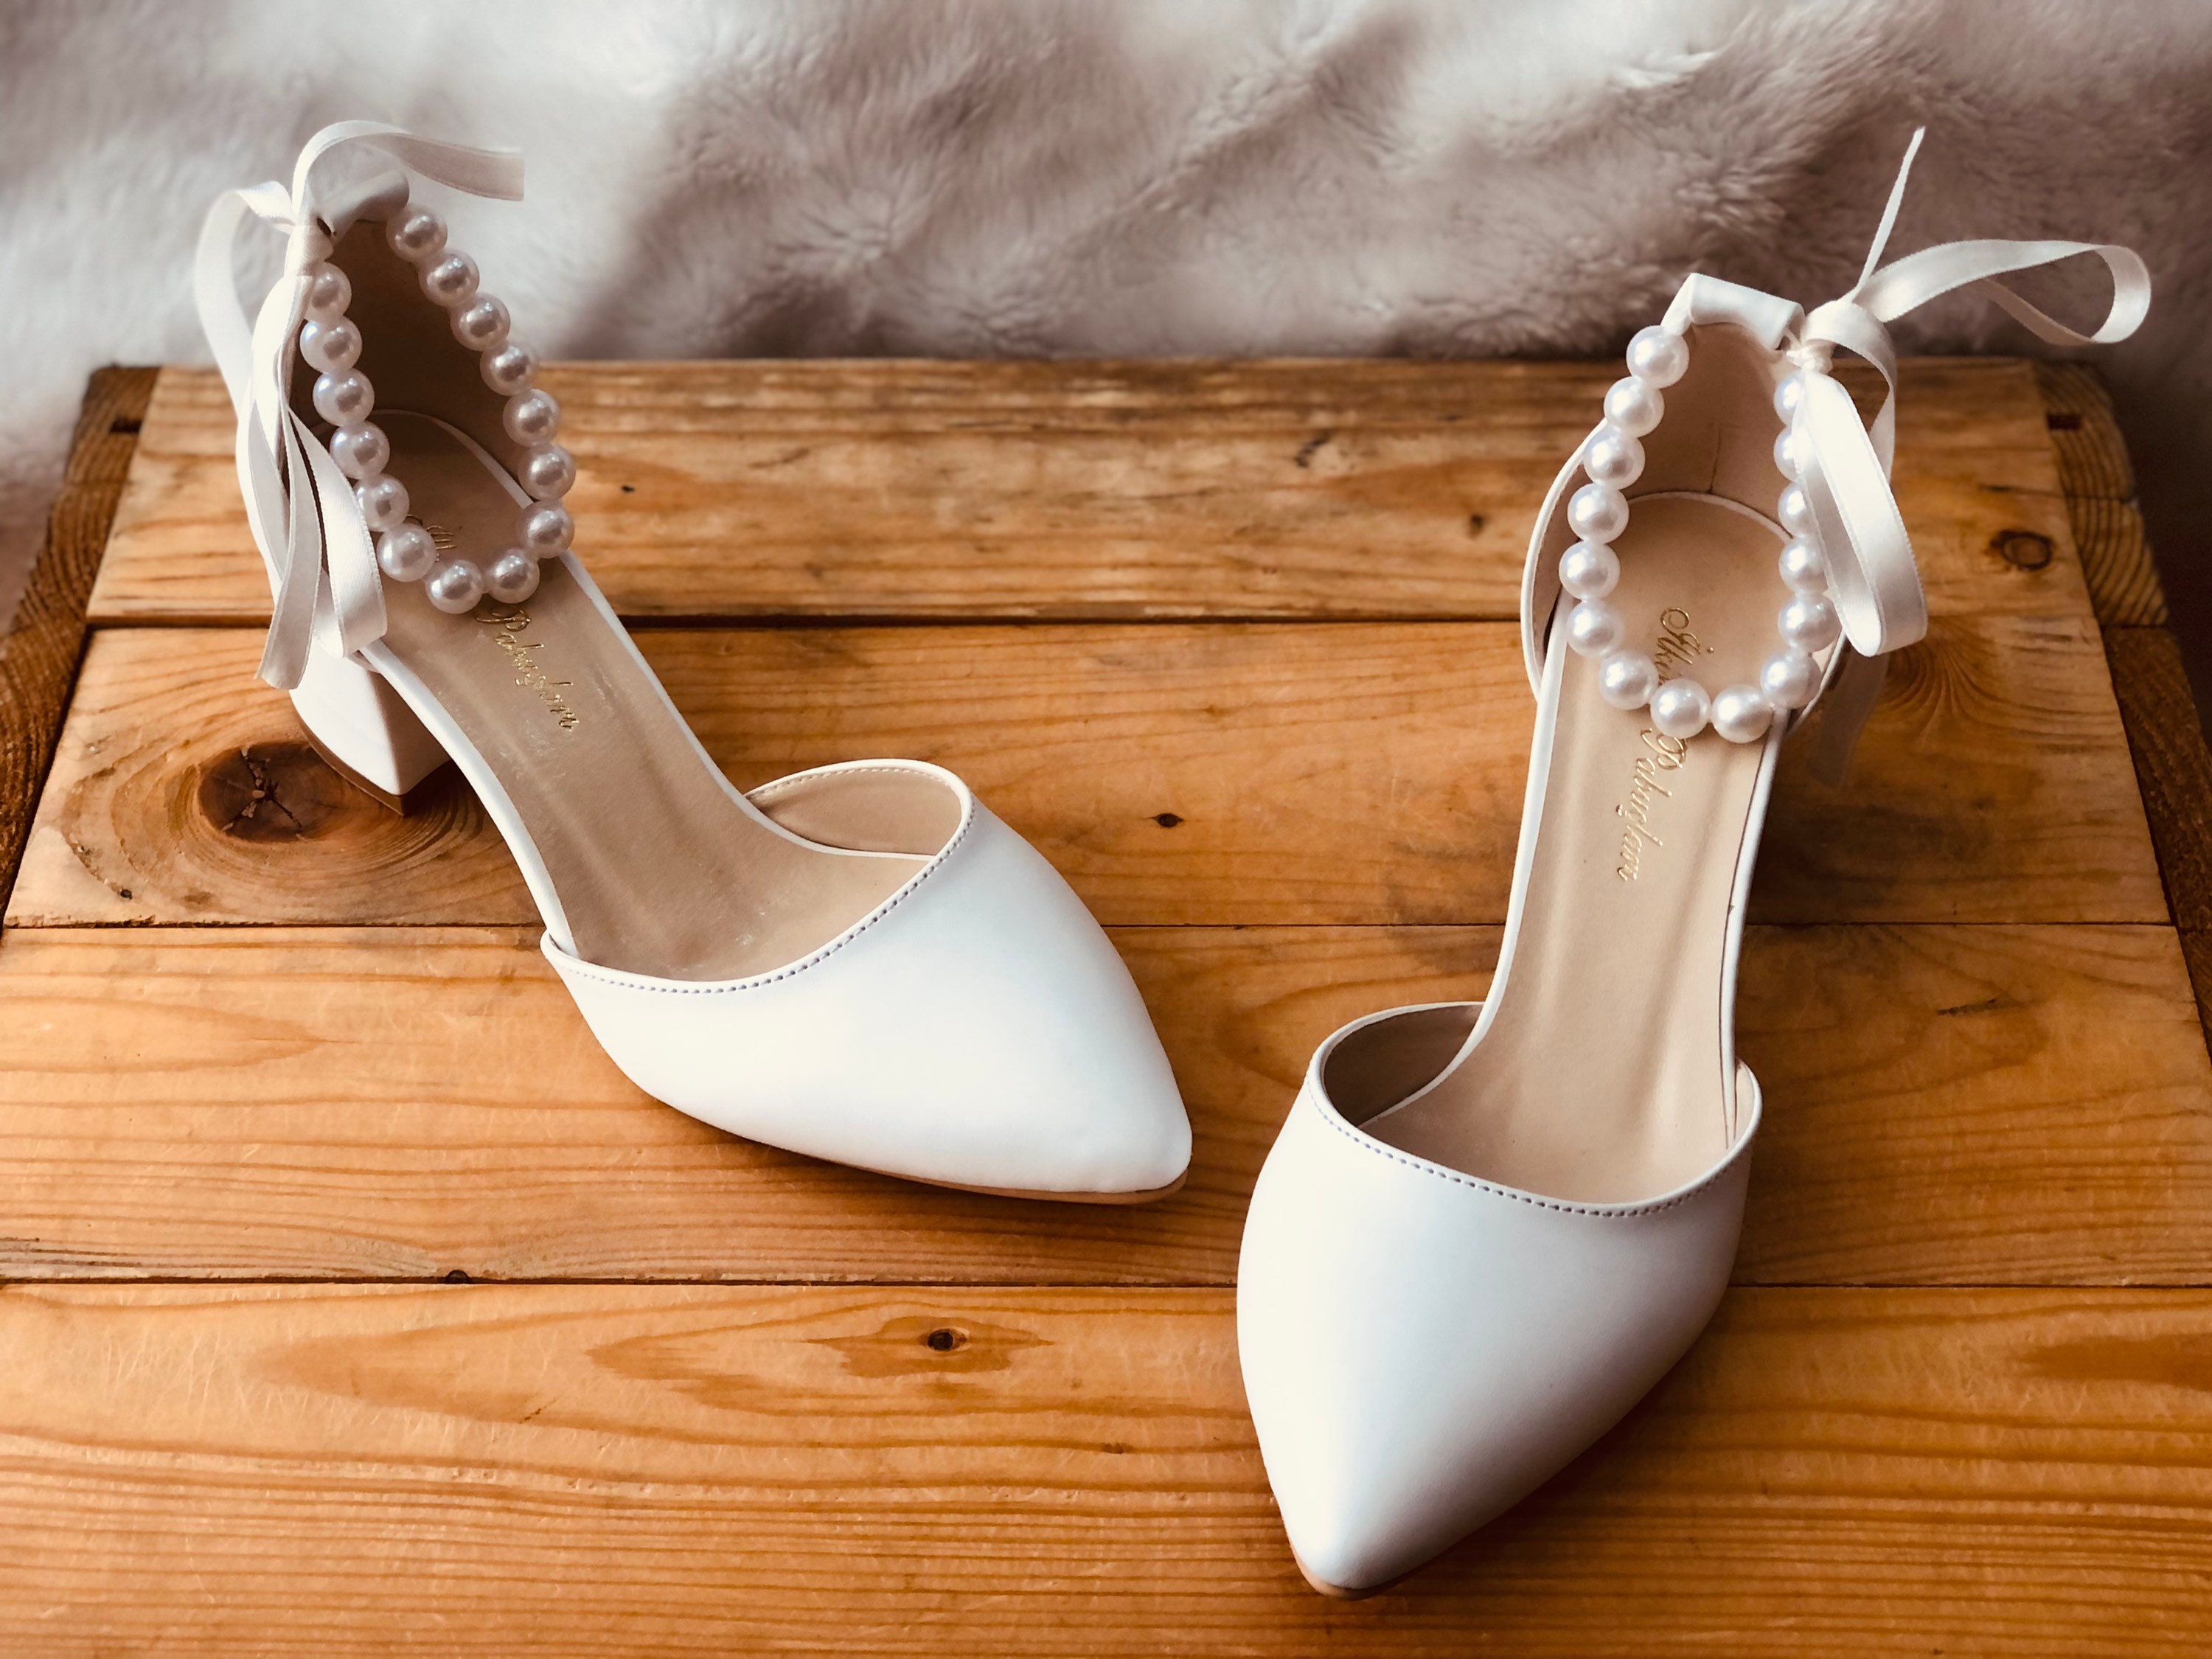  amiuwen Women Pearl Wedding Stilettos  Sandals,Concert,Party,Bridal,Ankle Strap,Open Square Toe,4 Heel ,Sexy,Elegant,Style(11)